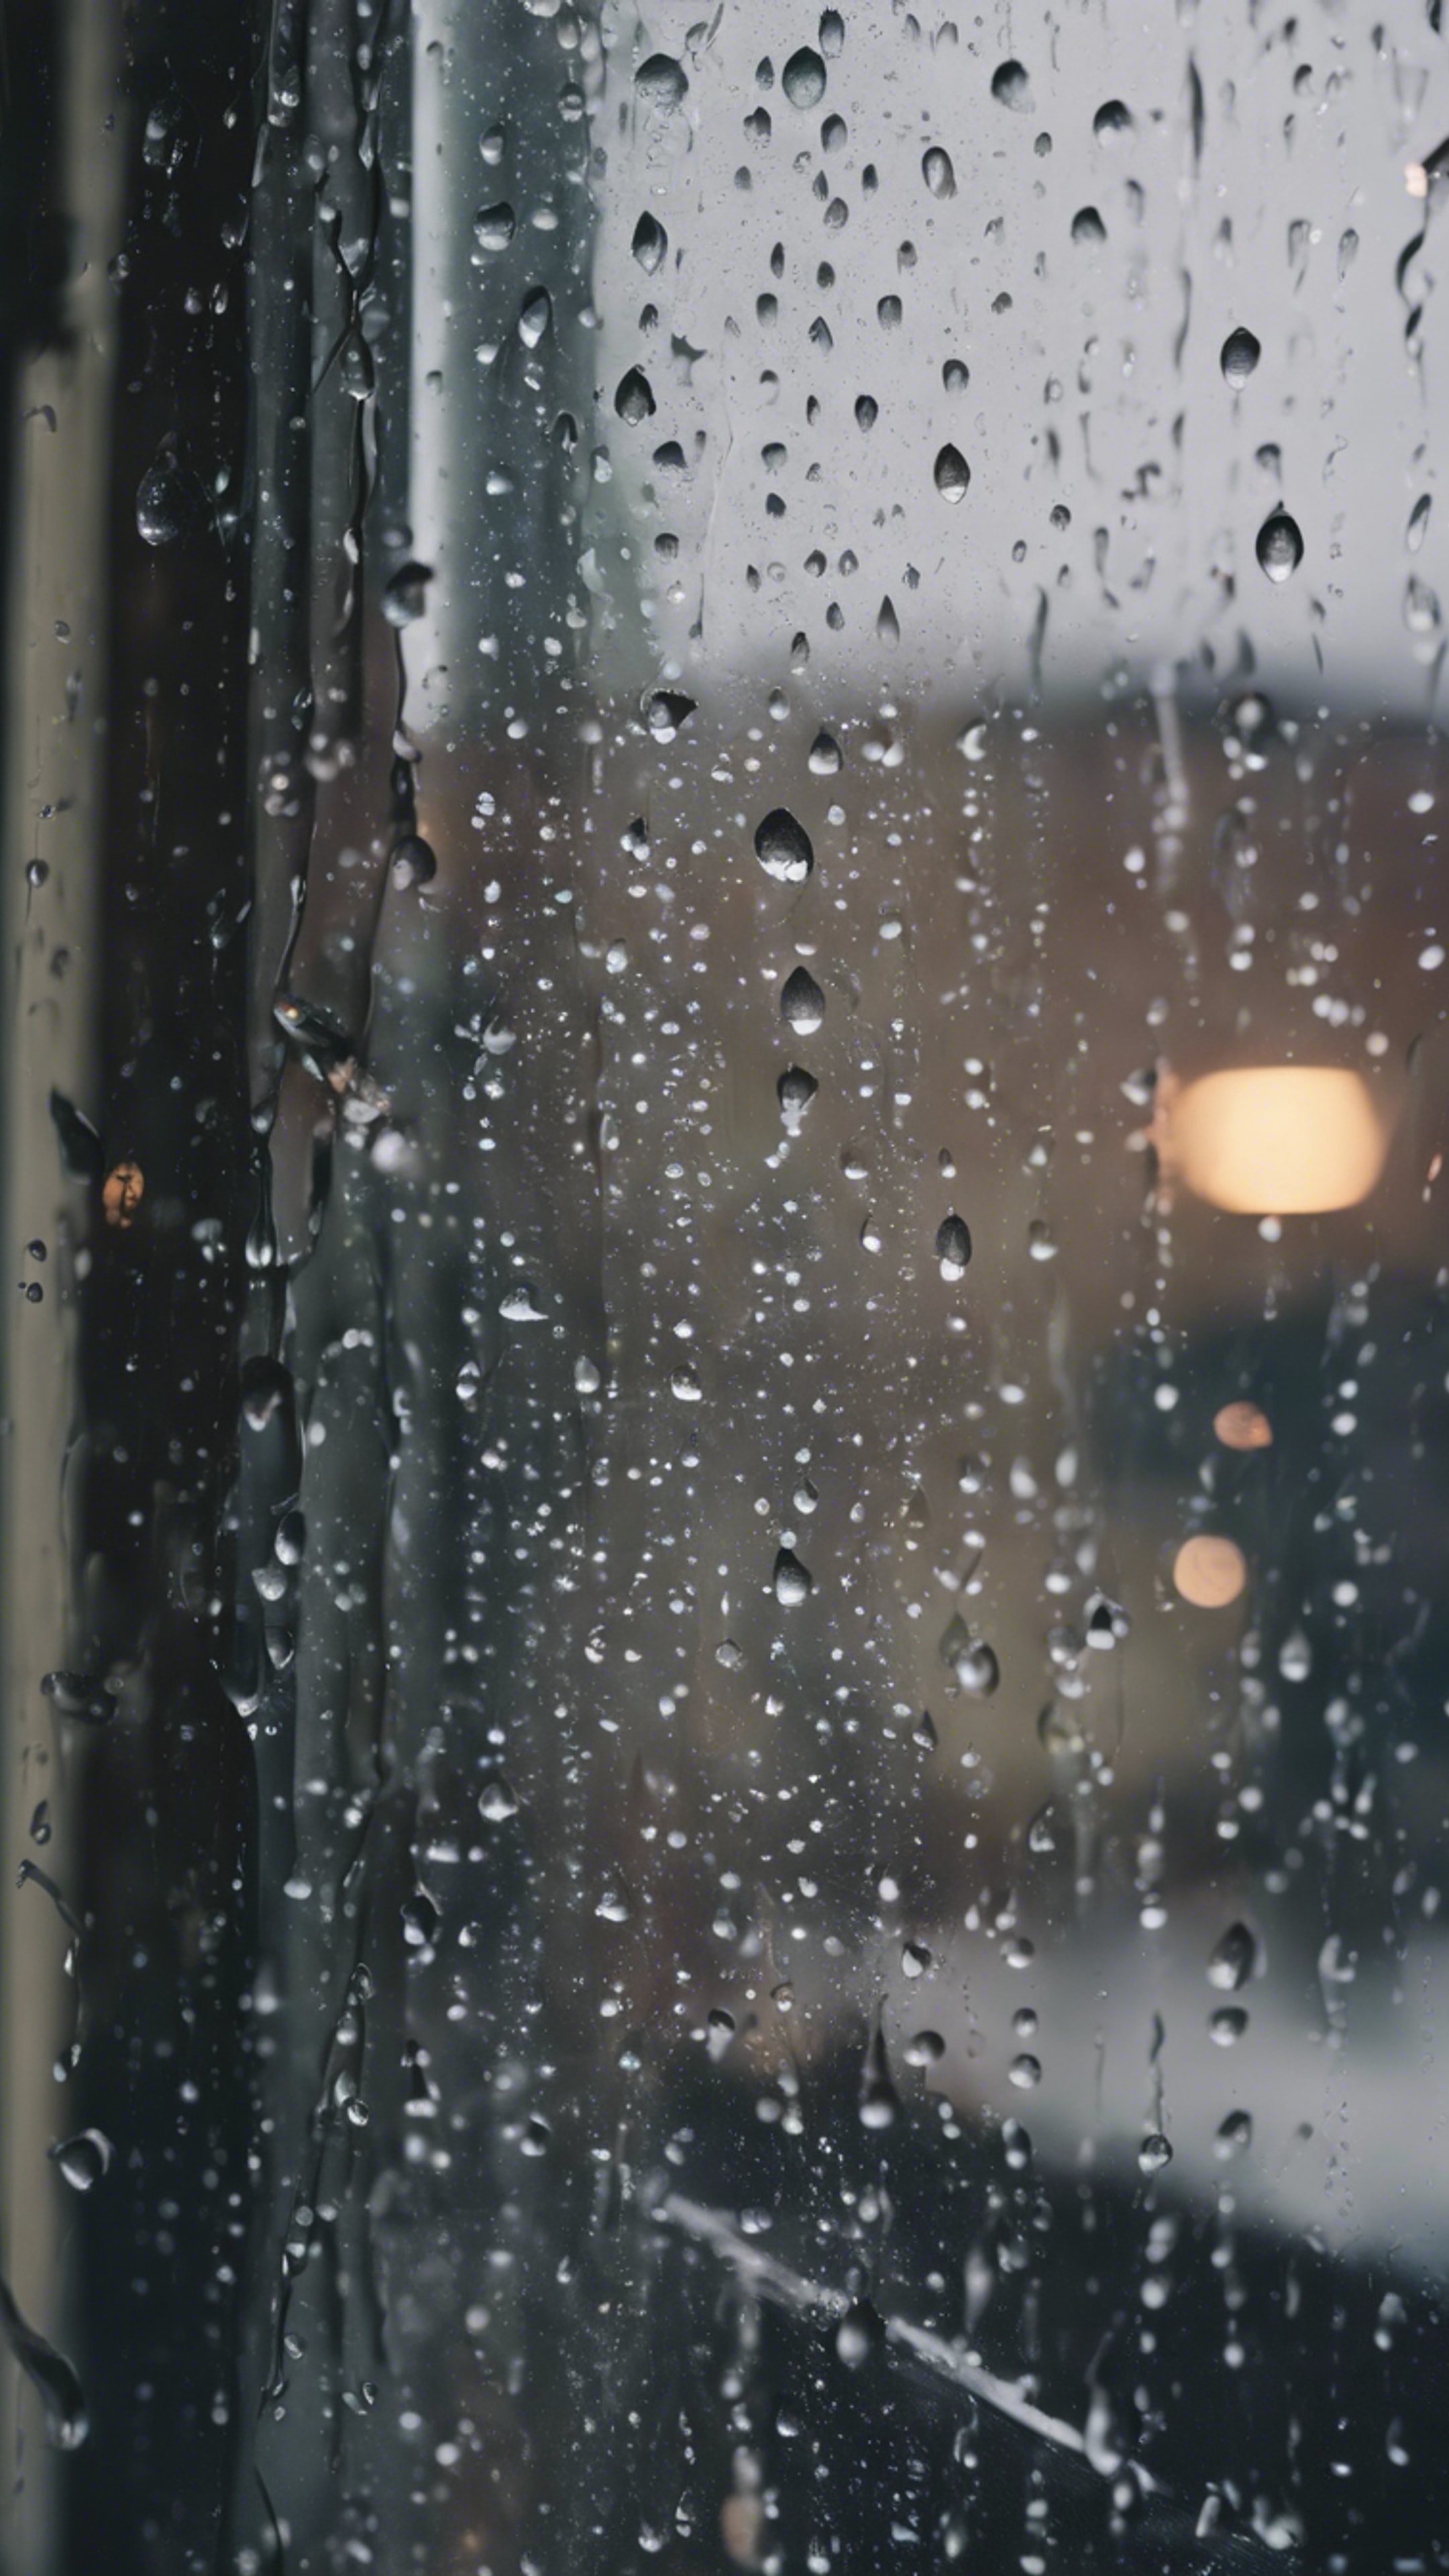 A heavy rainstorm viewed through a window, the droplets streaking down the glass Fondo de pantalla[548369da7c5b4ee9bdb0]